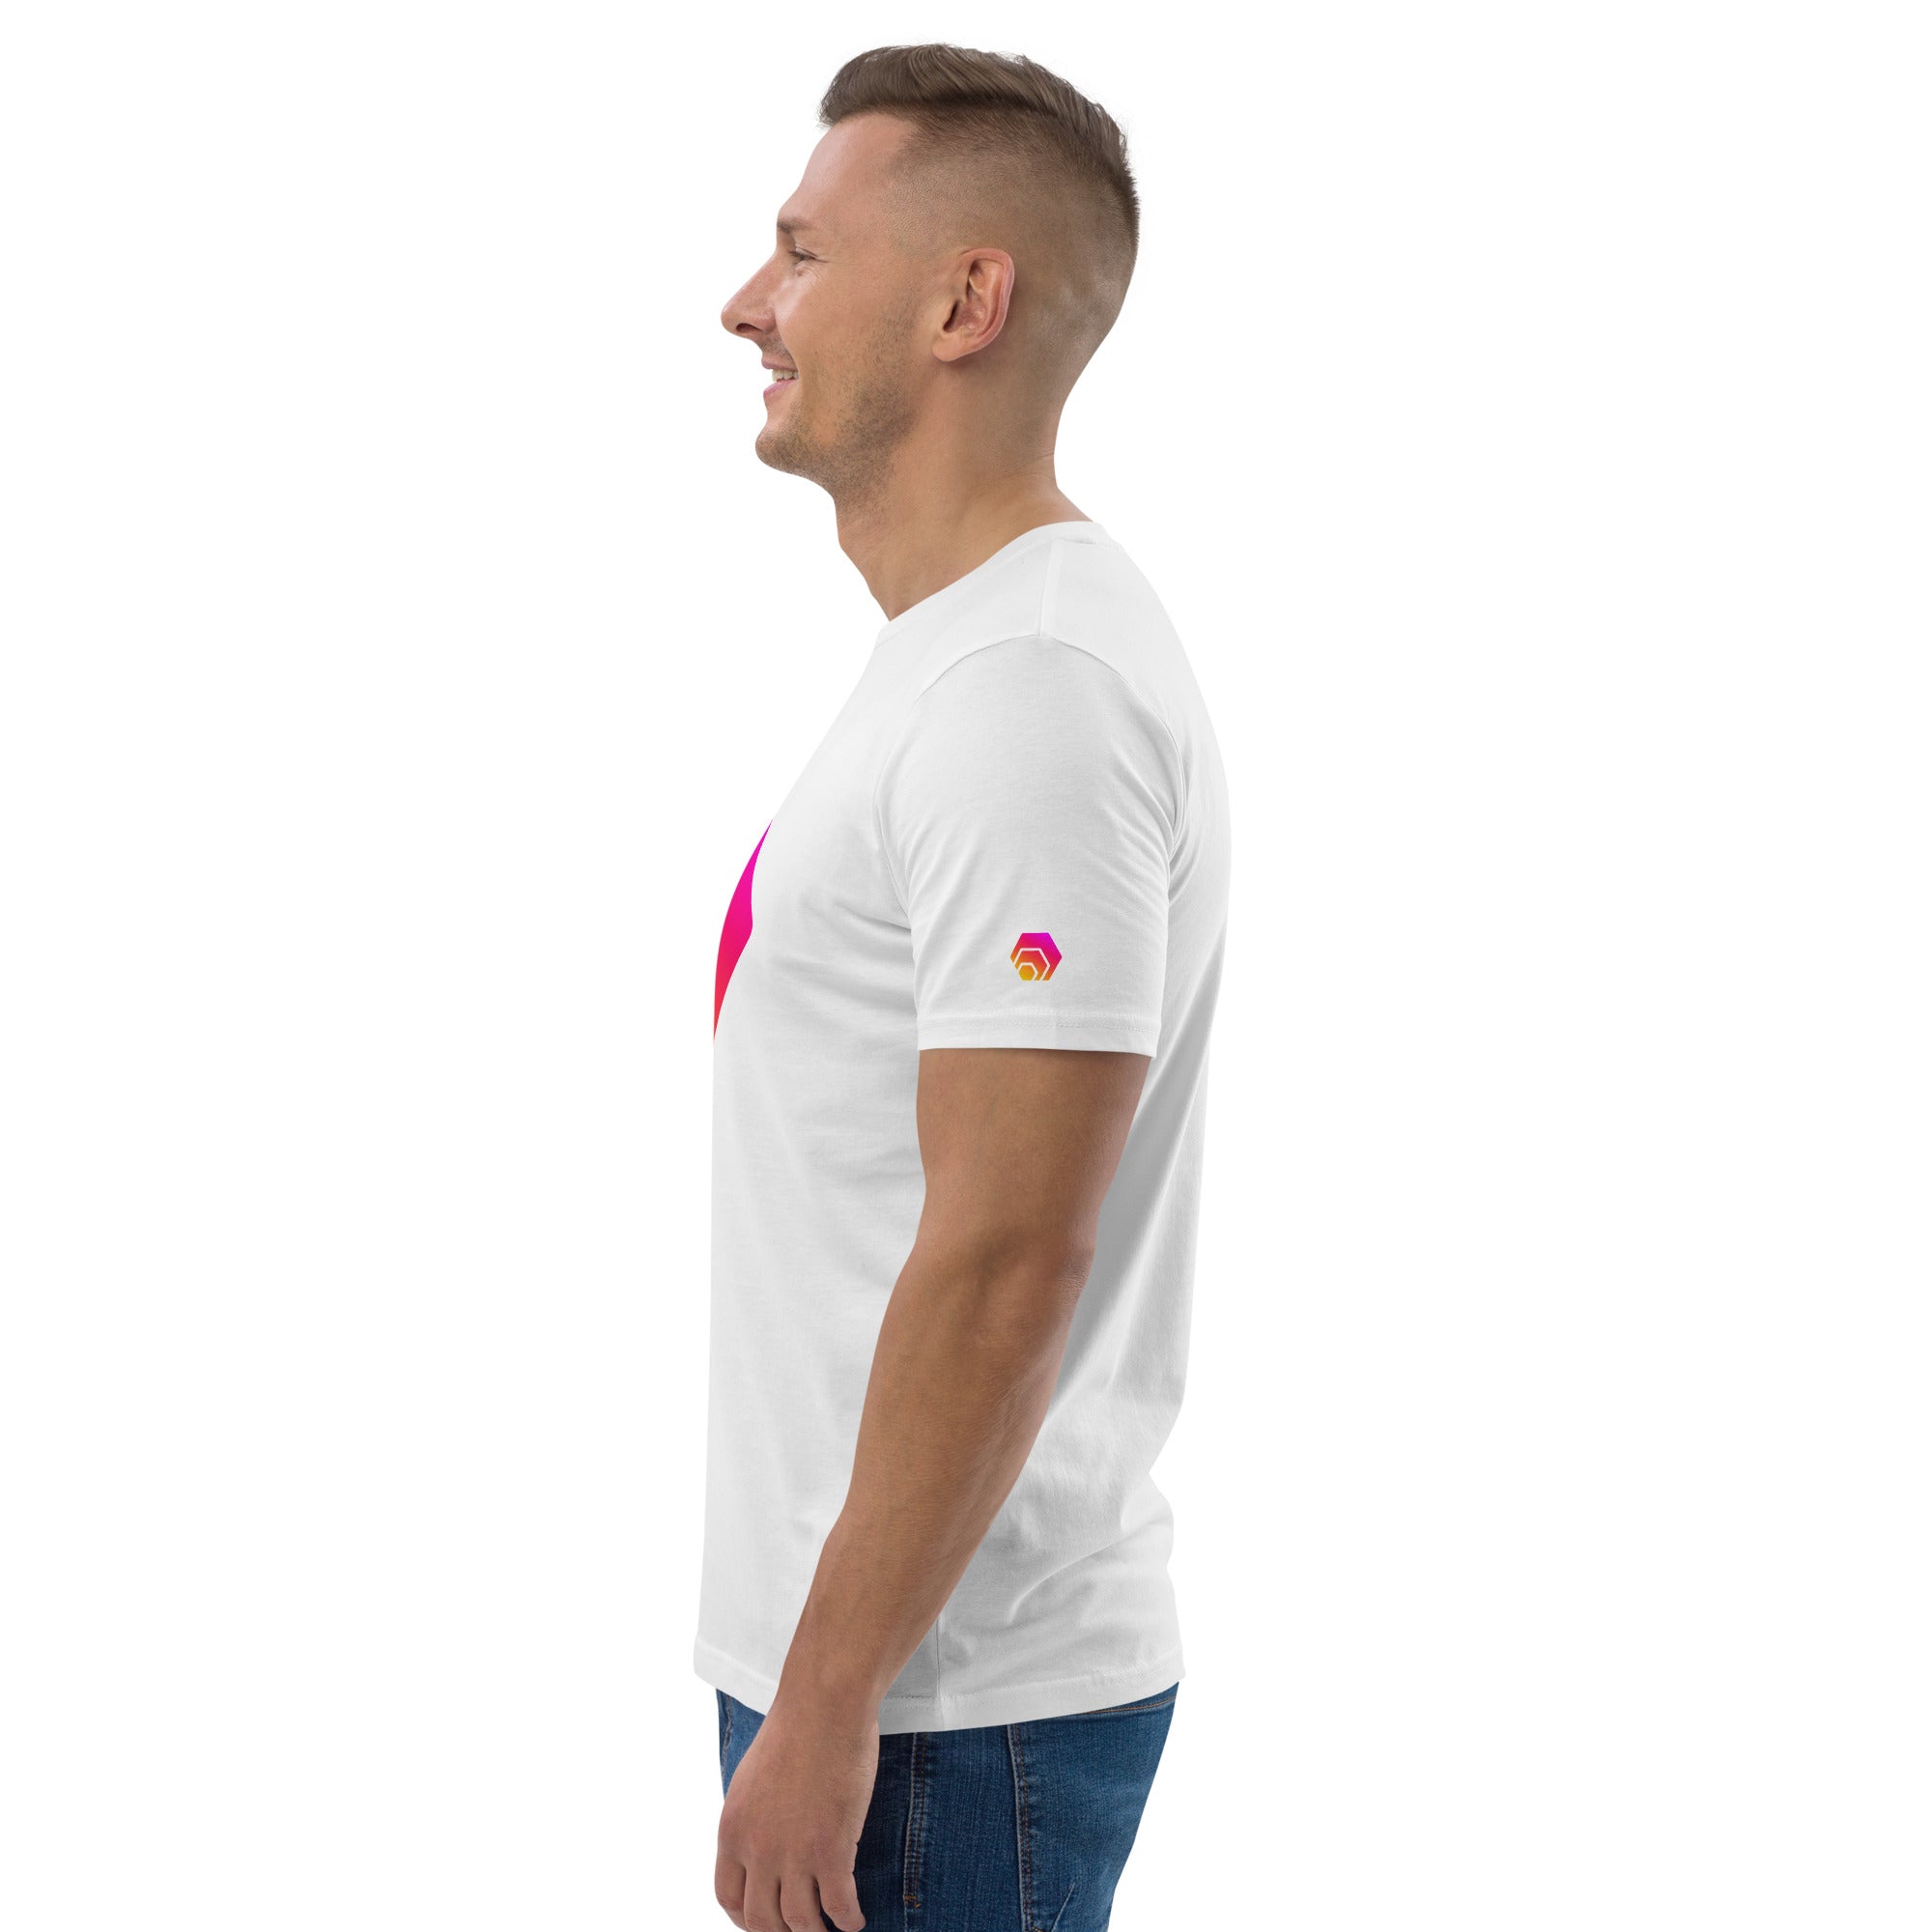 HEX 360 Unisex Organic T-Shirt